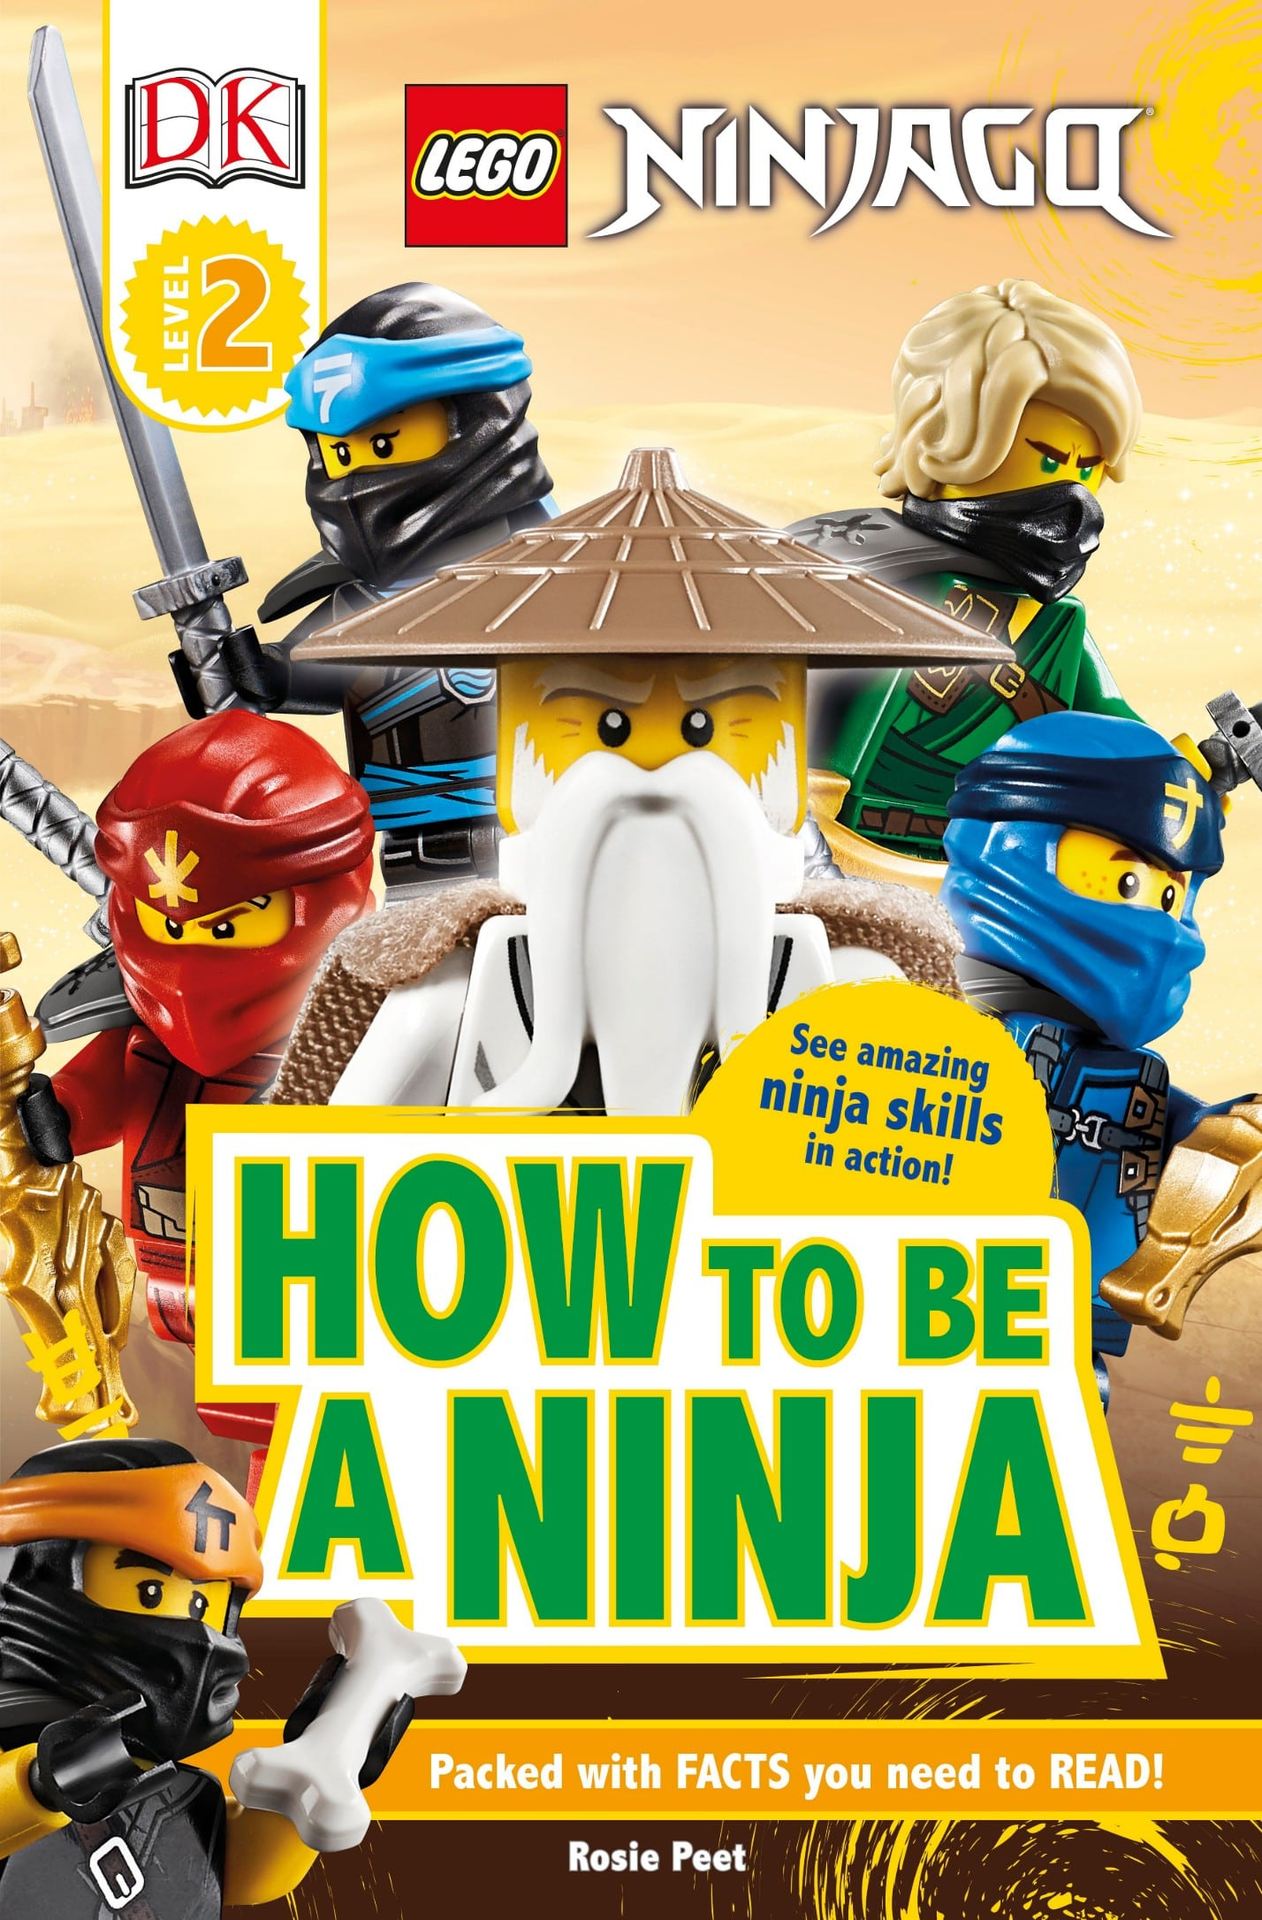 Ninjago-Way of the Ninja-Spot the Difference - Crane Book Fairs